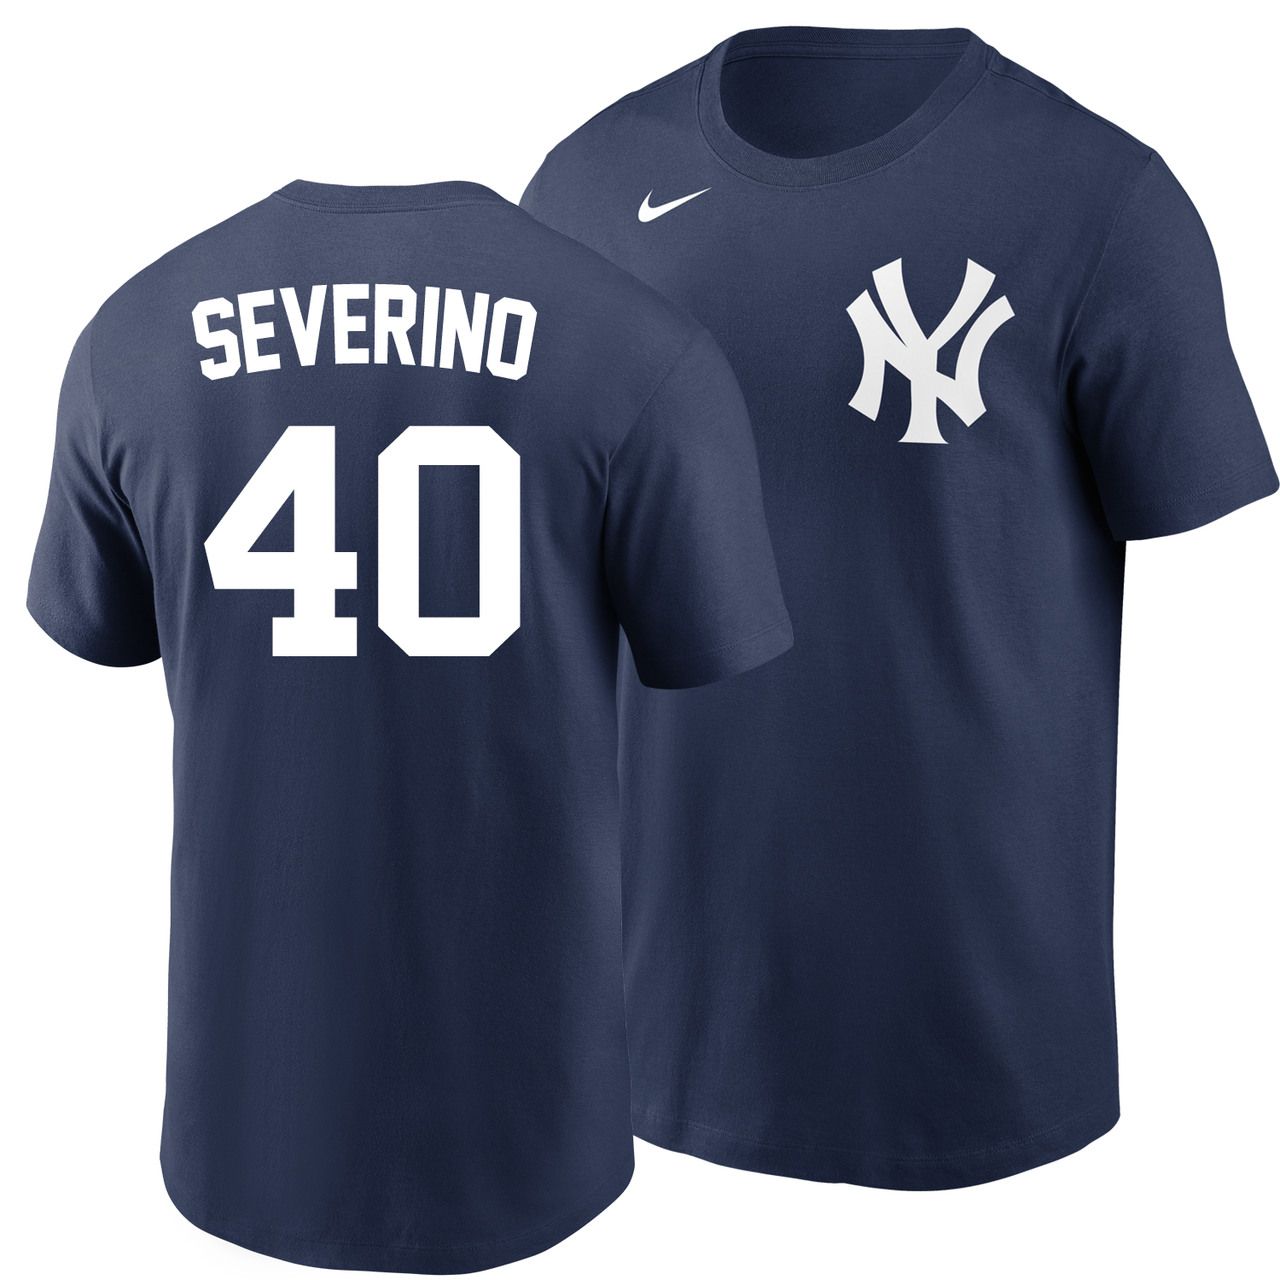 Baseball Luisseverino Luis Severino Luis Severino New York Yankees  Newyorkyankees Dominican Professi T-Shirt